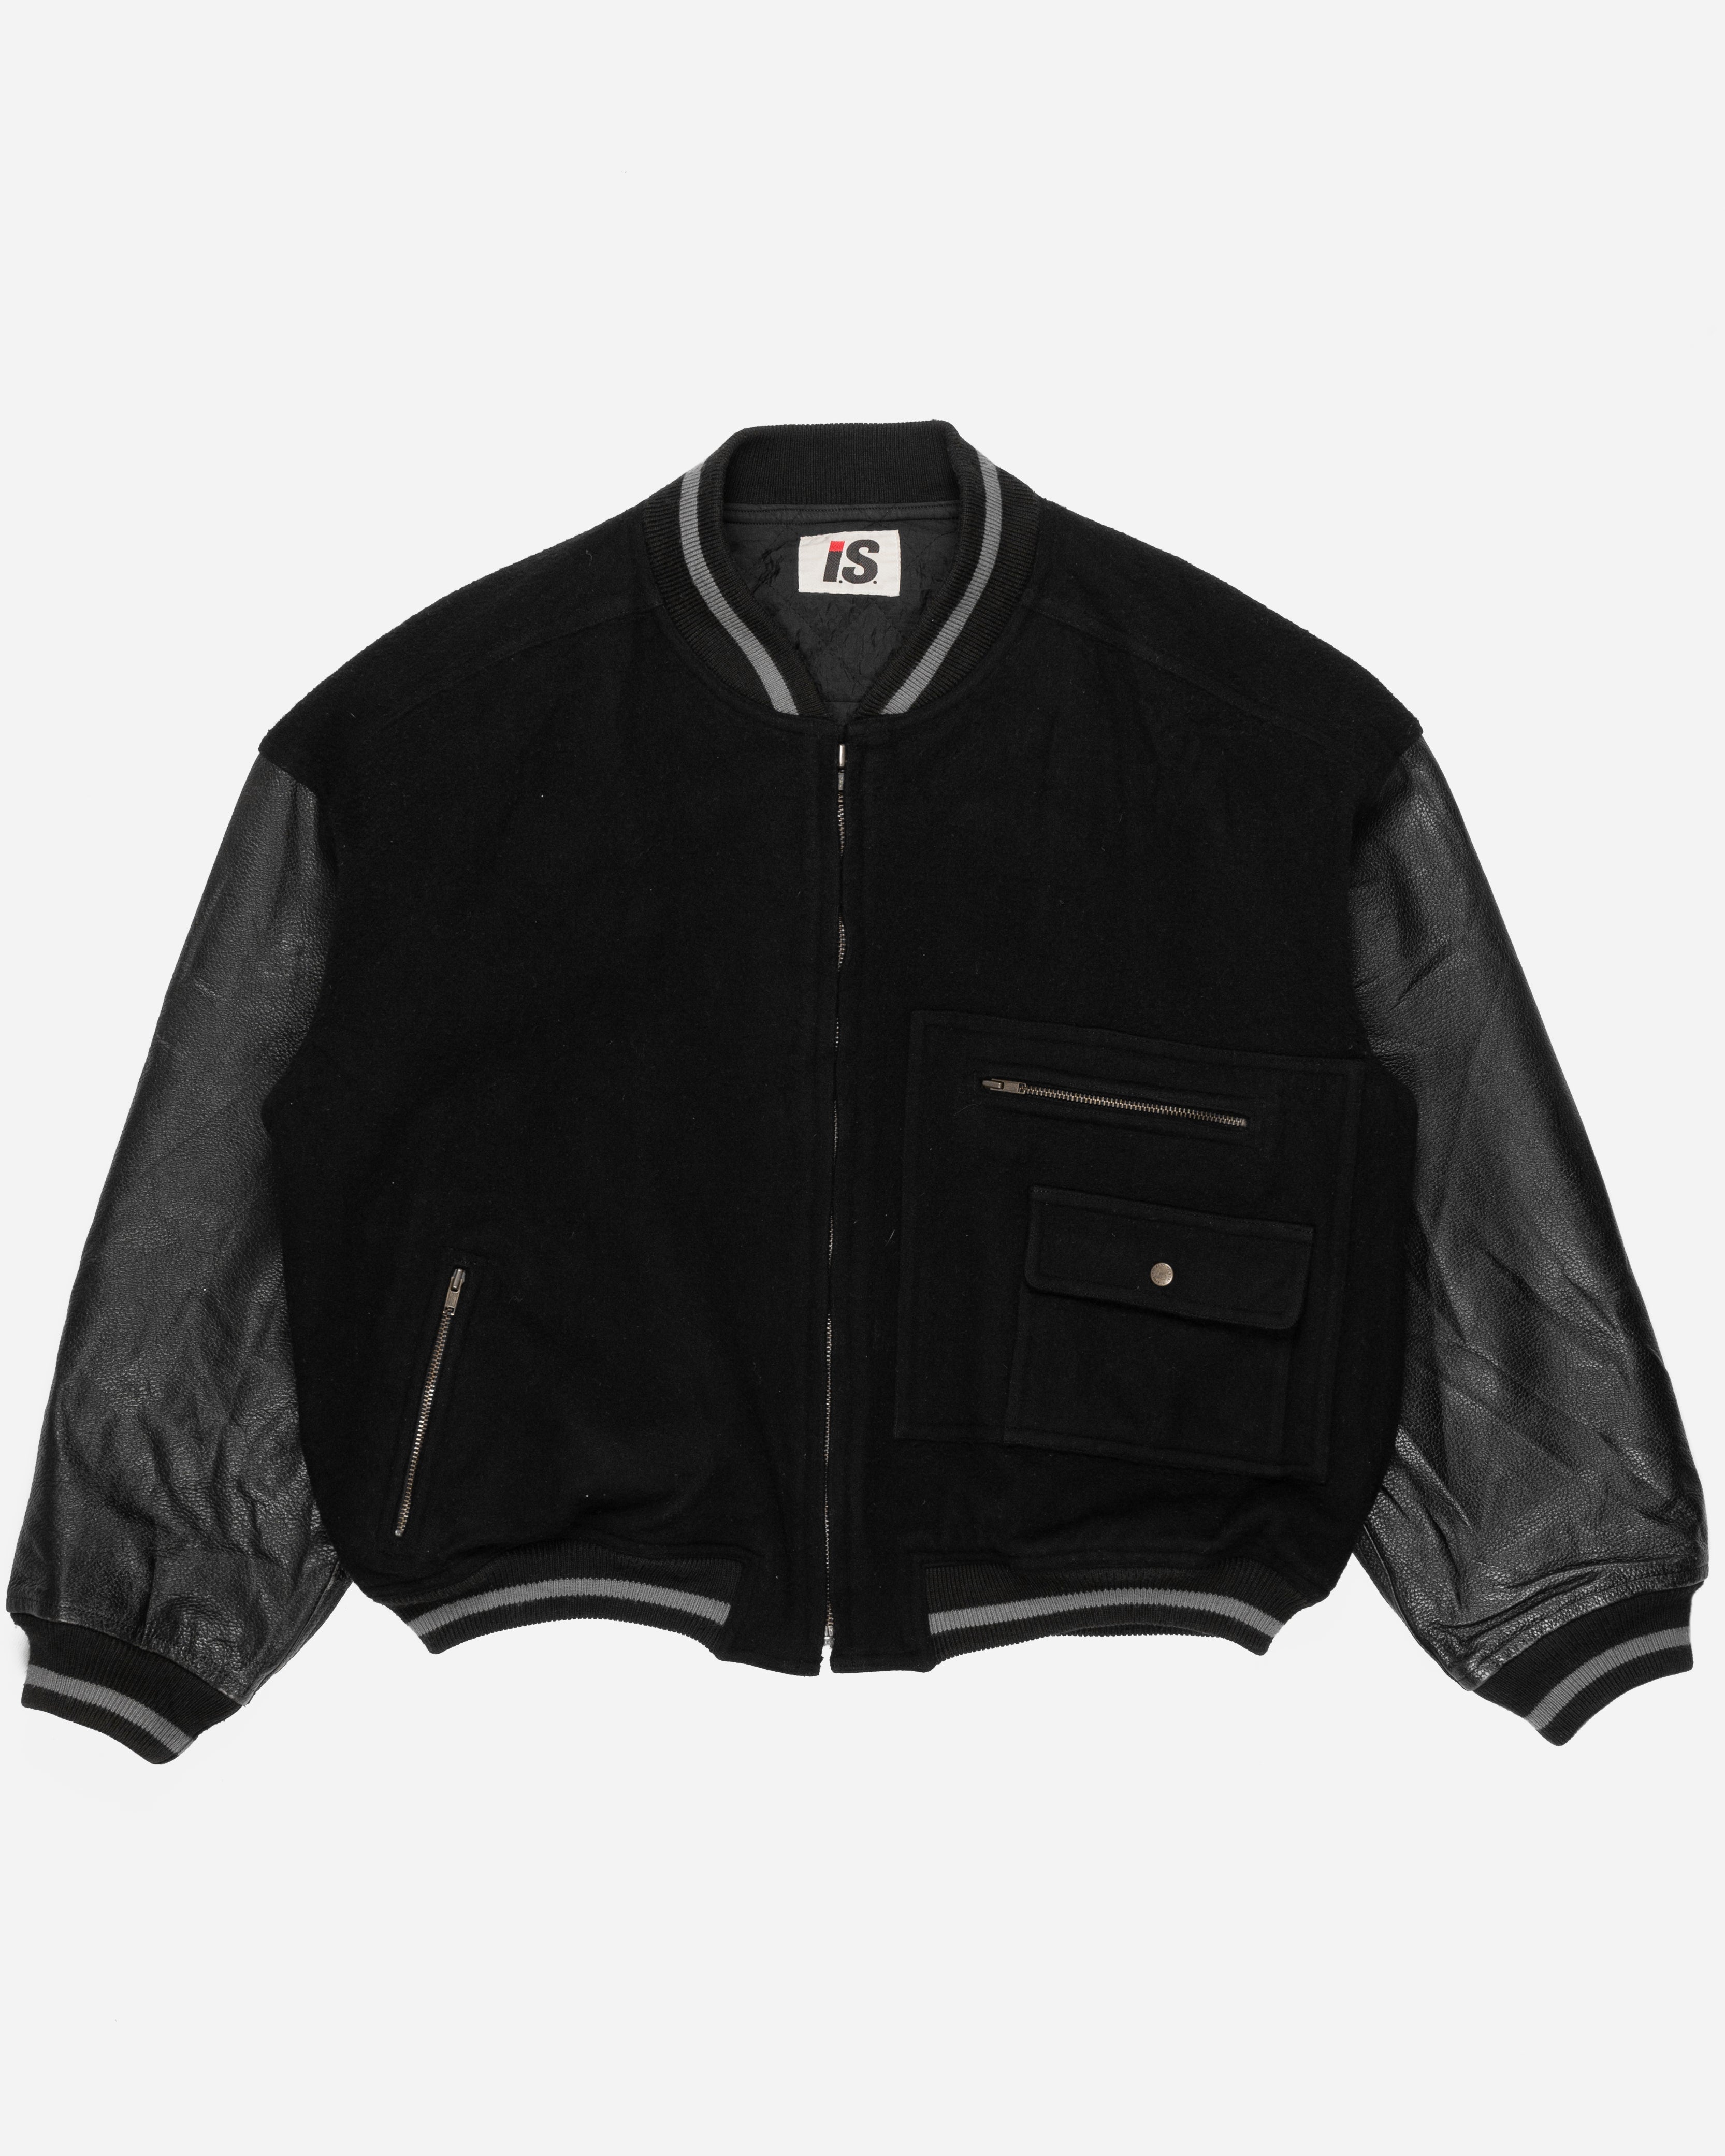 Issey Miyake Sport Black Leather Sleeve Varsity Jacket - 1980s